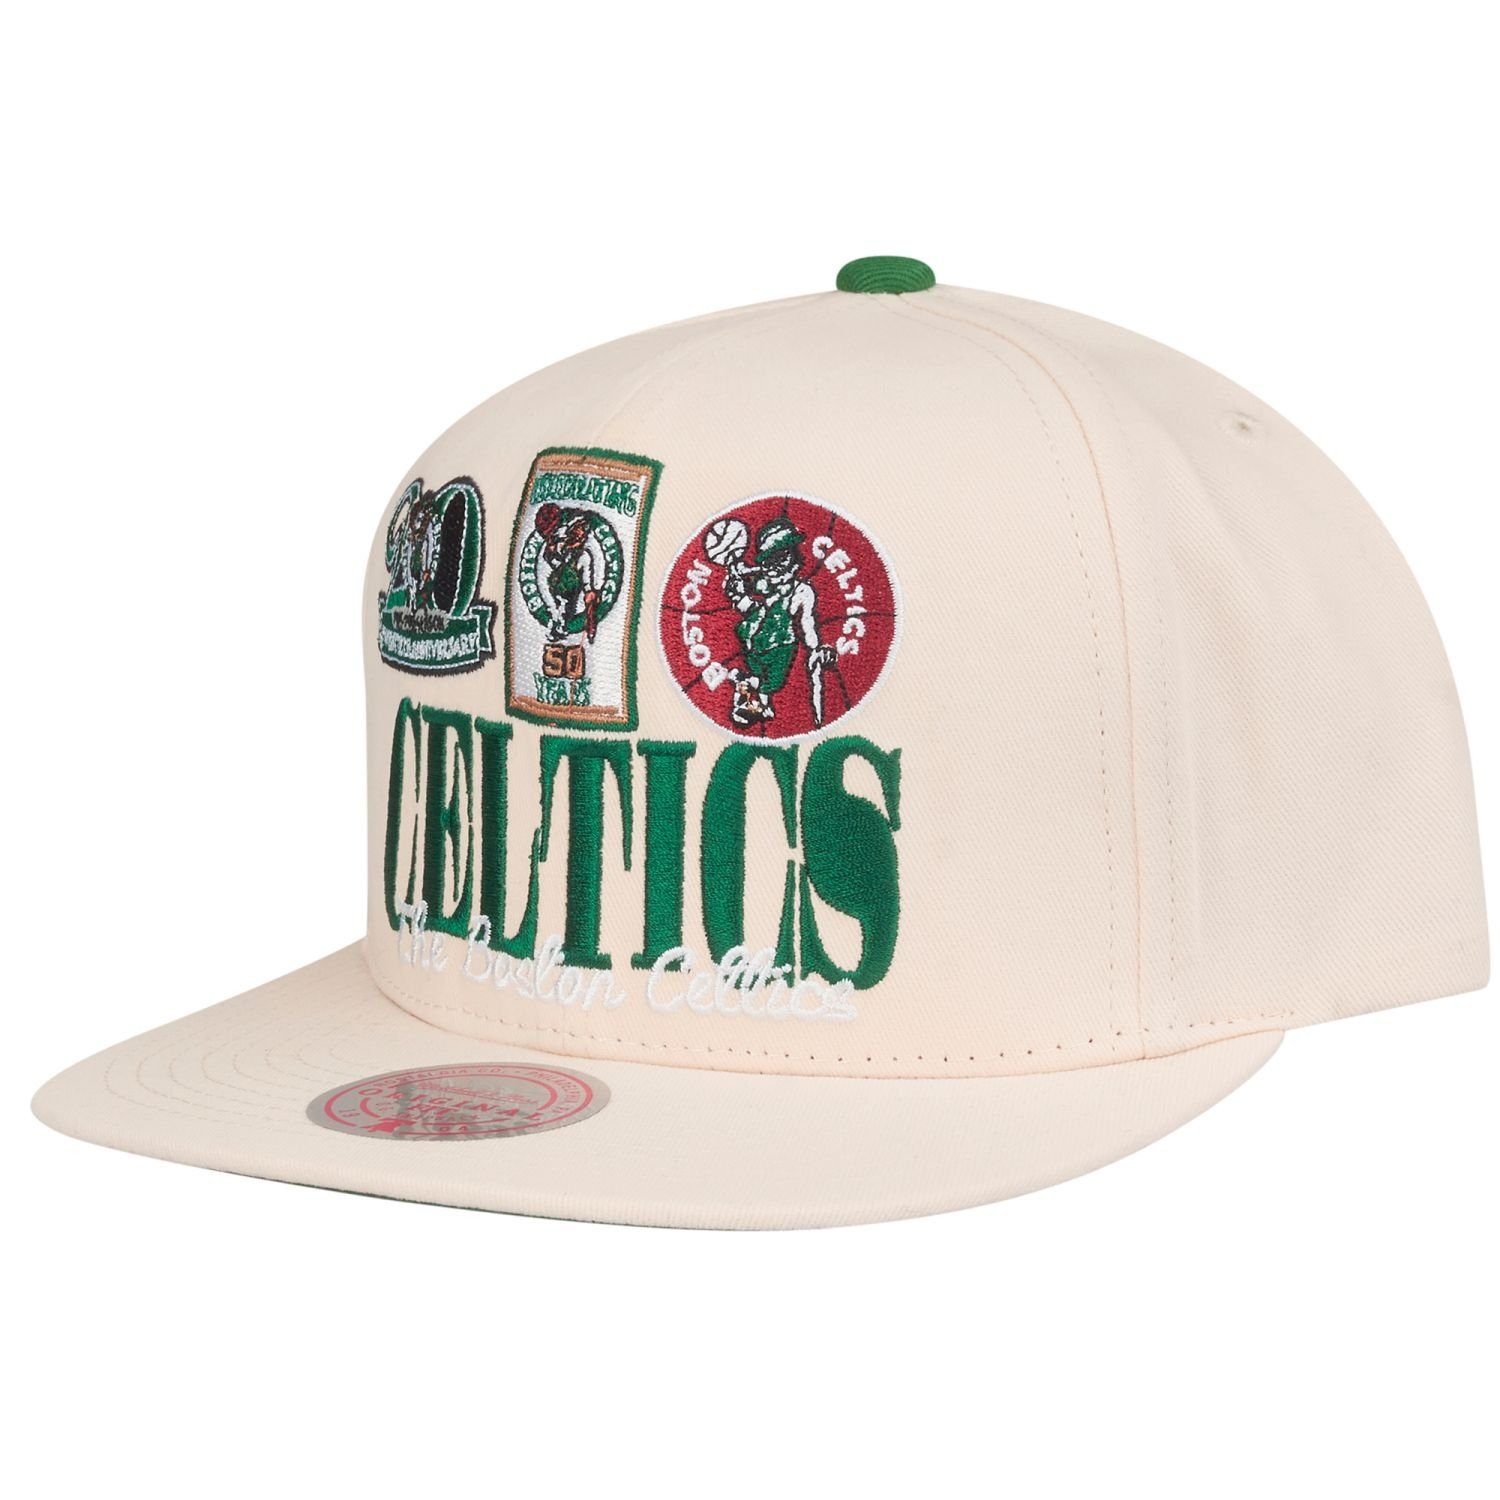 RETRO Celtics & Cap Ness Mitchell Snapback FRAME Teams Boston NBA